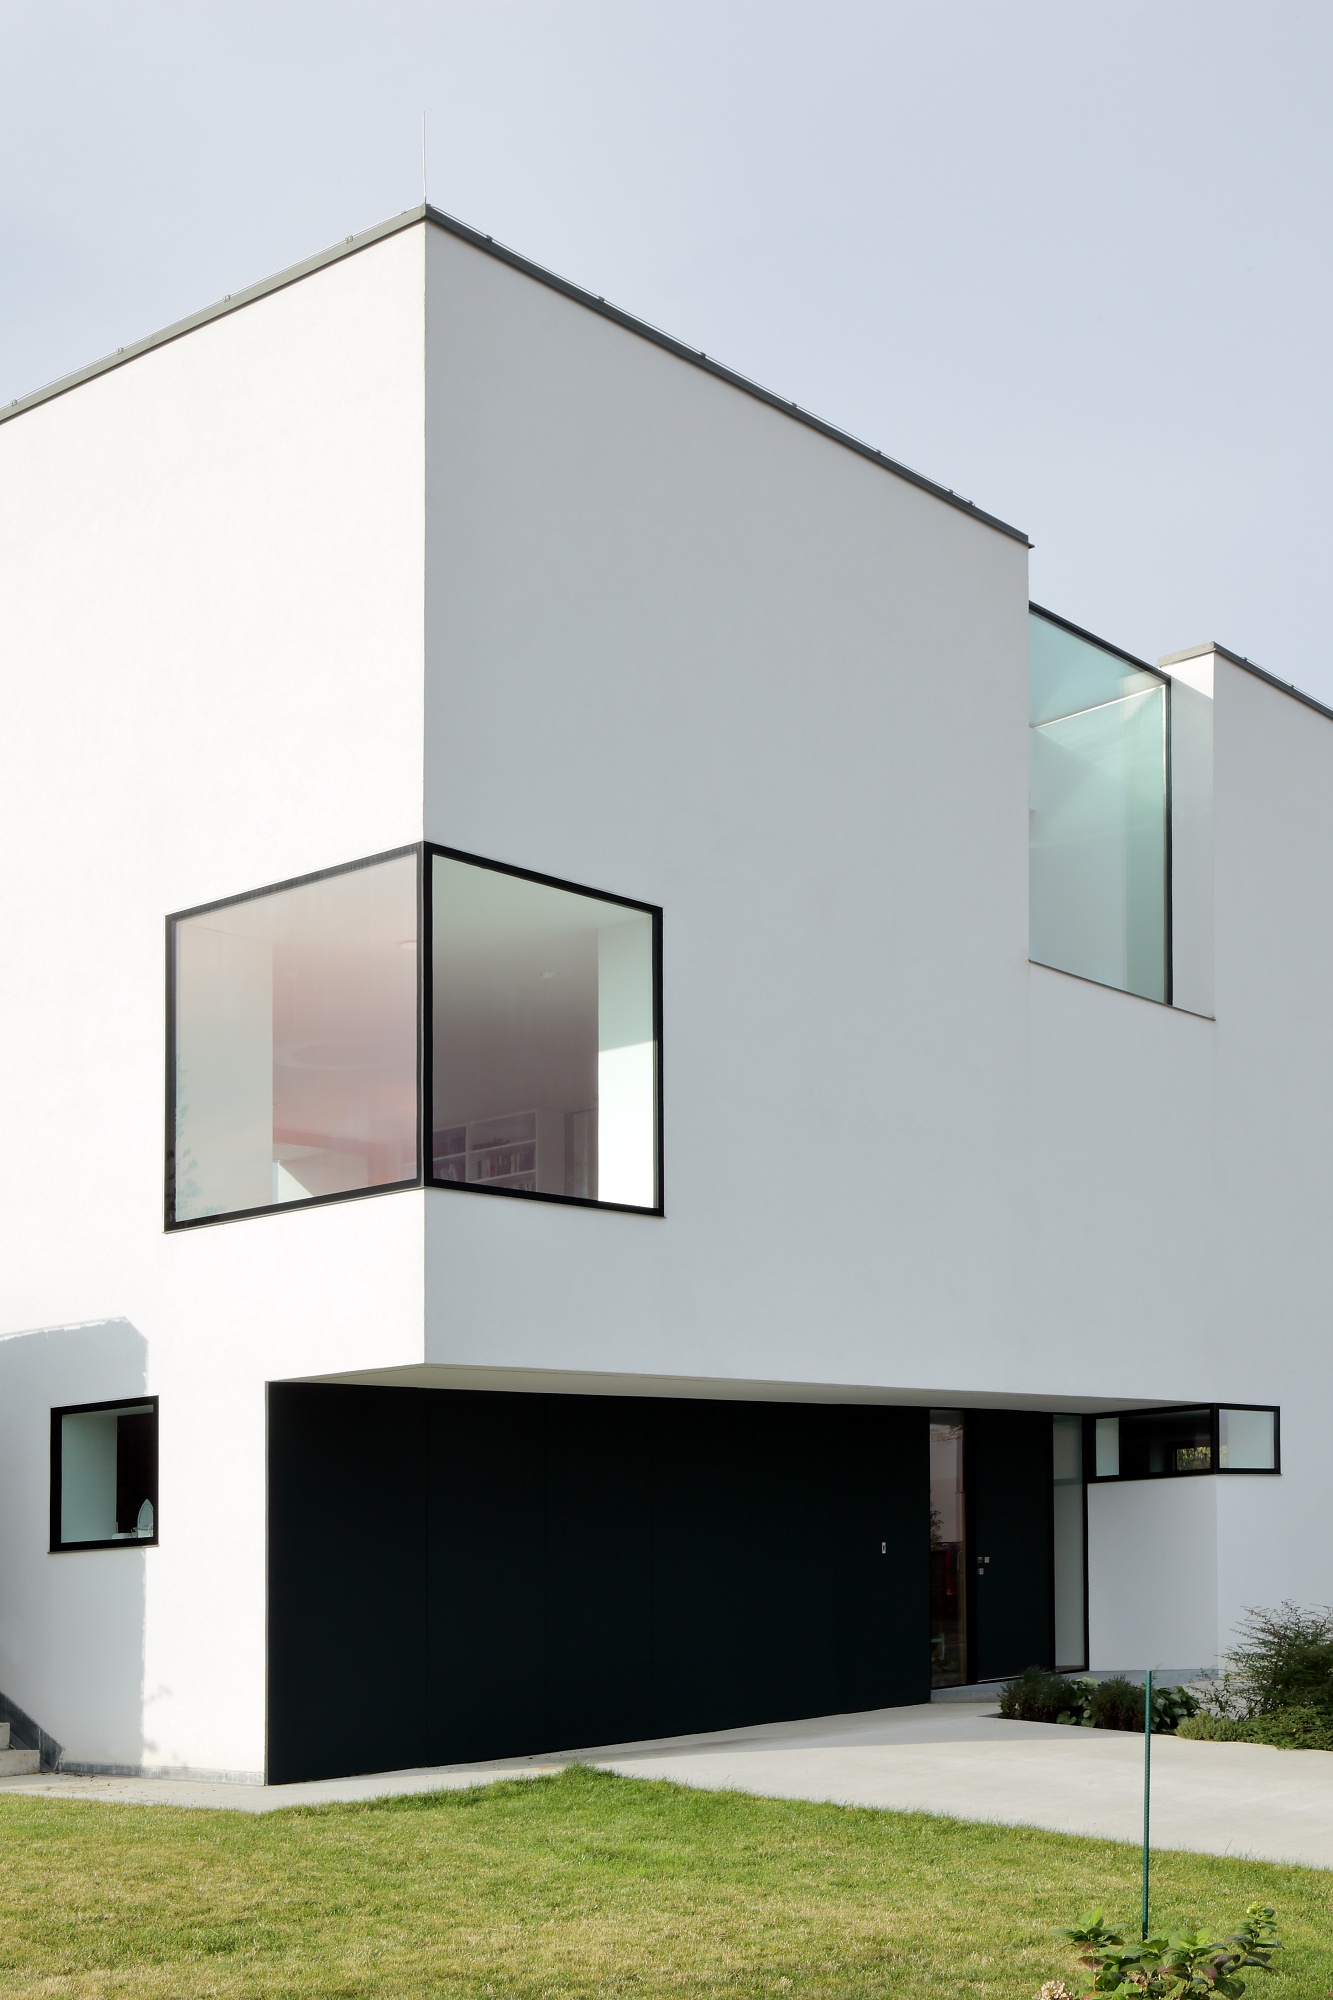 Bílý geometrický rodinný dům s velkými bezrámovými okny